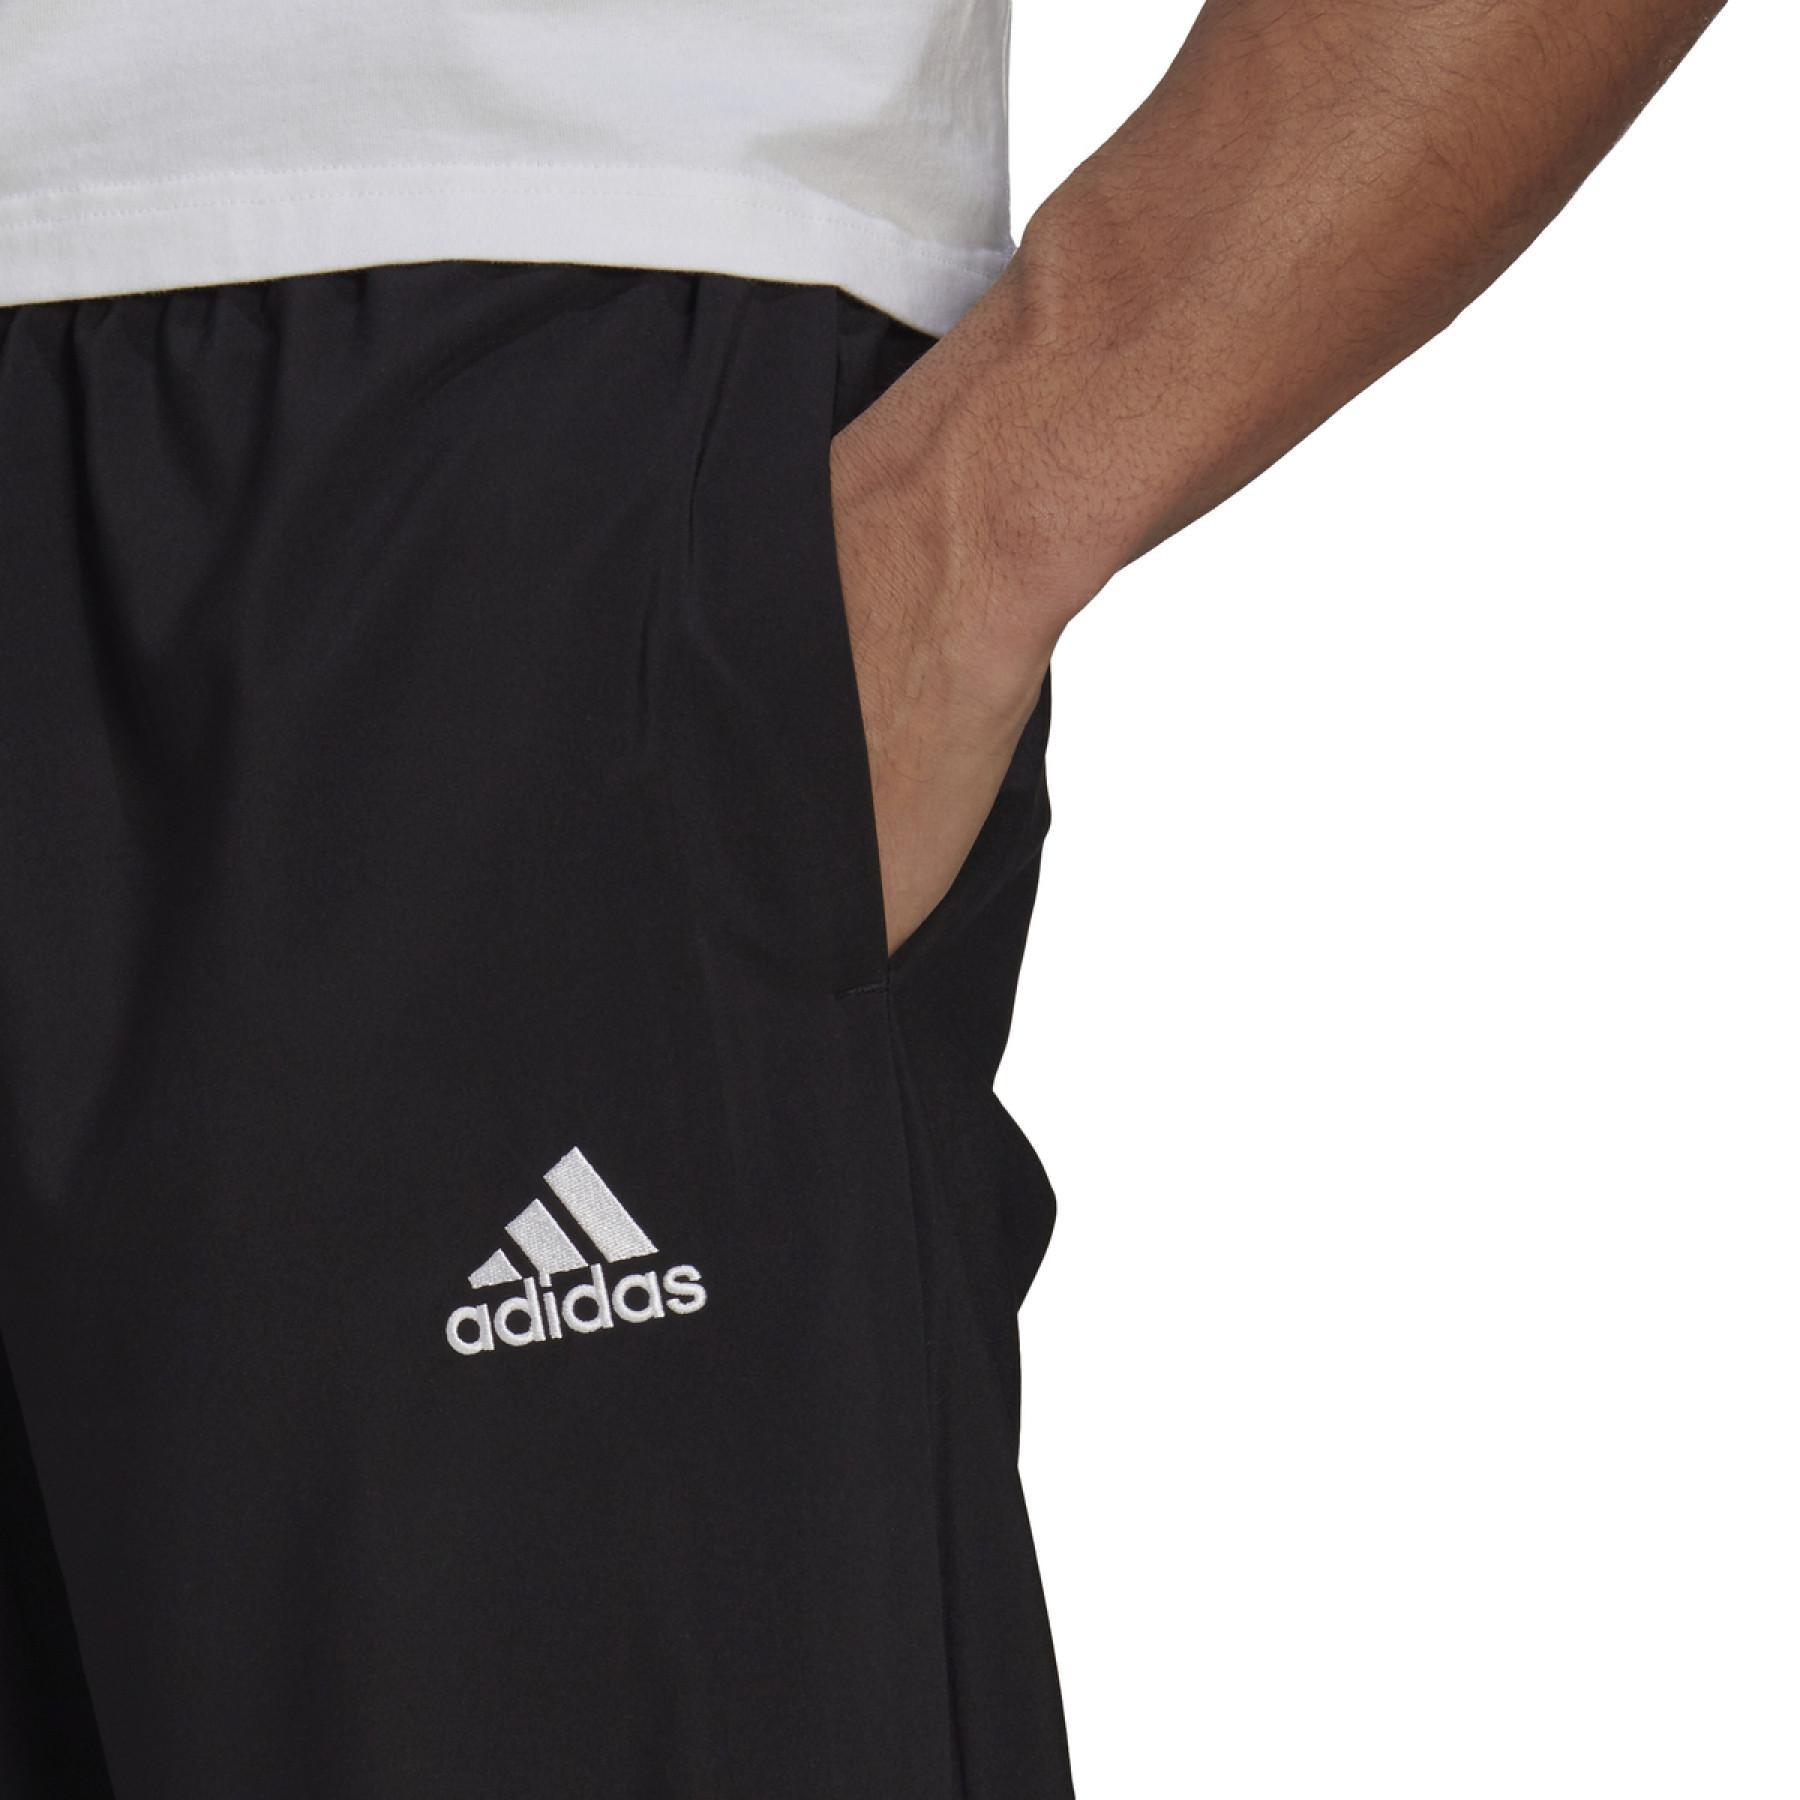 Pants adidas Aeroready Stanford - adidas - Brands - Handball wear